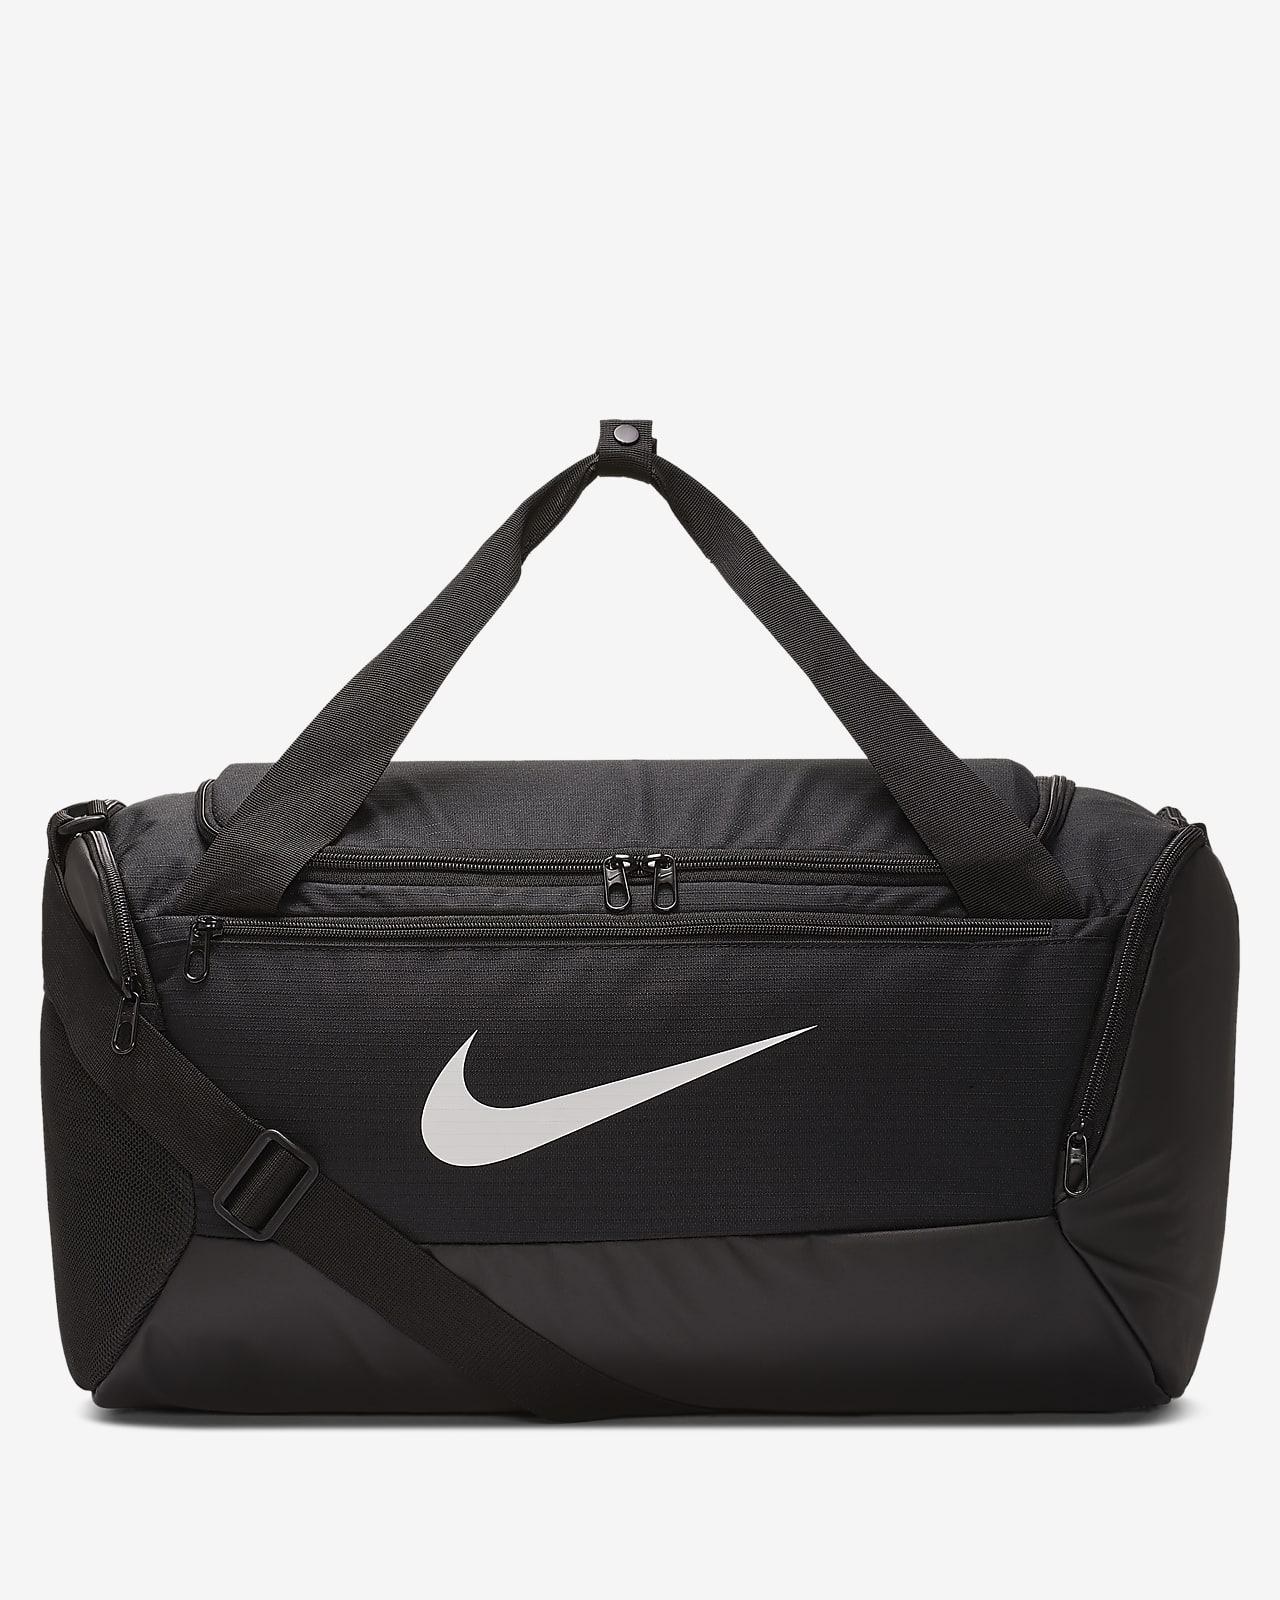 threshold wing Take away Nike Brasilia S Duffel Bag new Zealand, SAVE 40% - aveclumiere.com